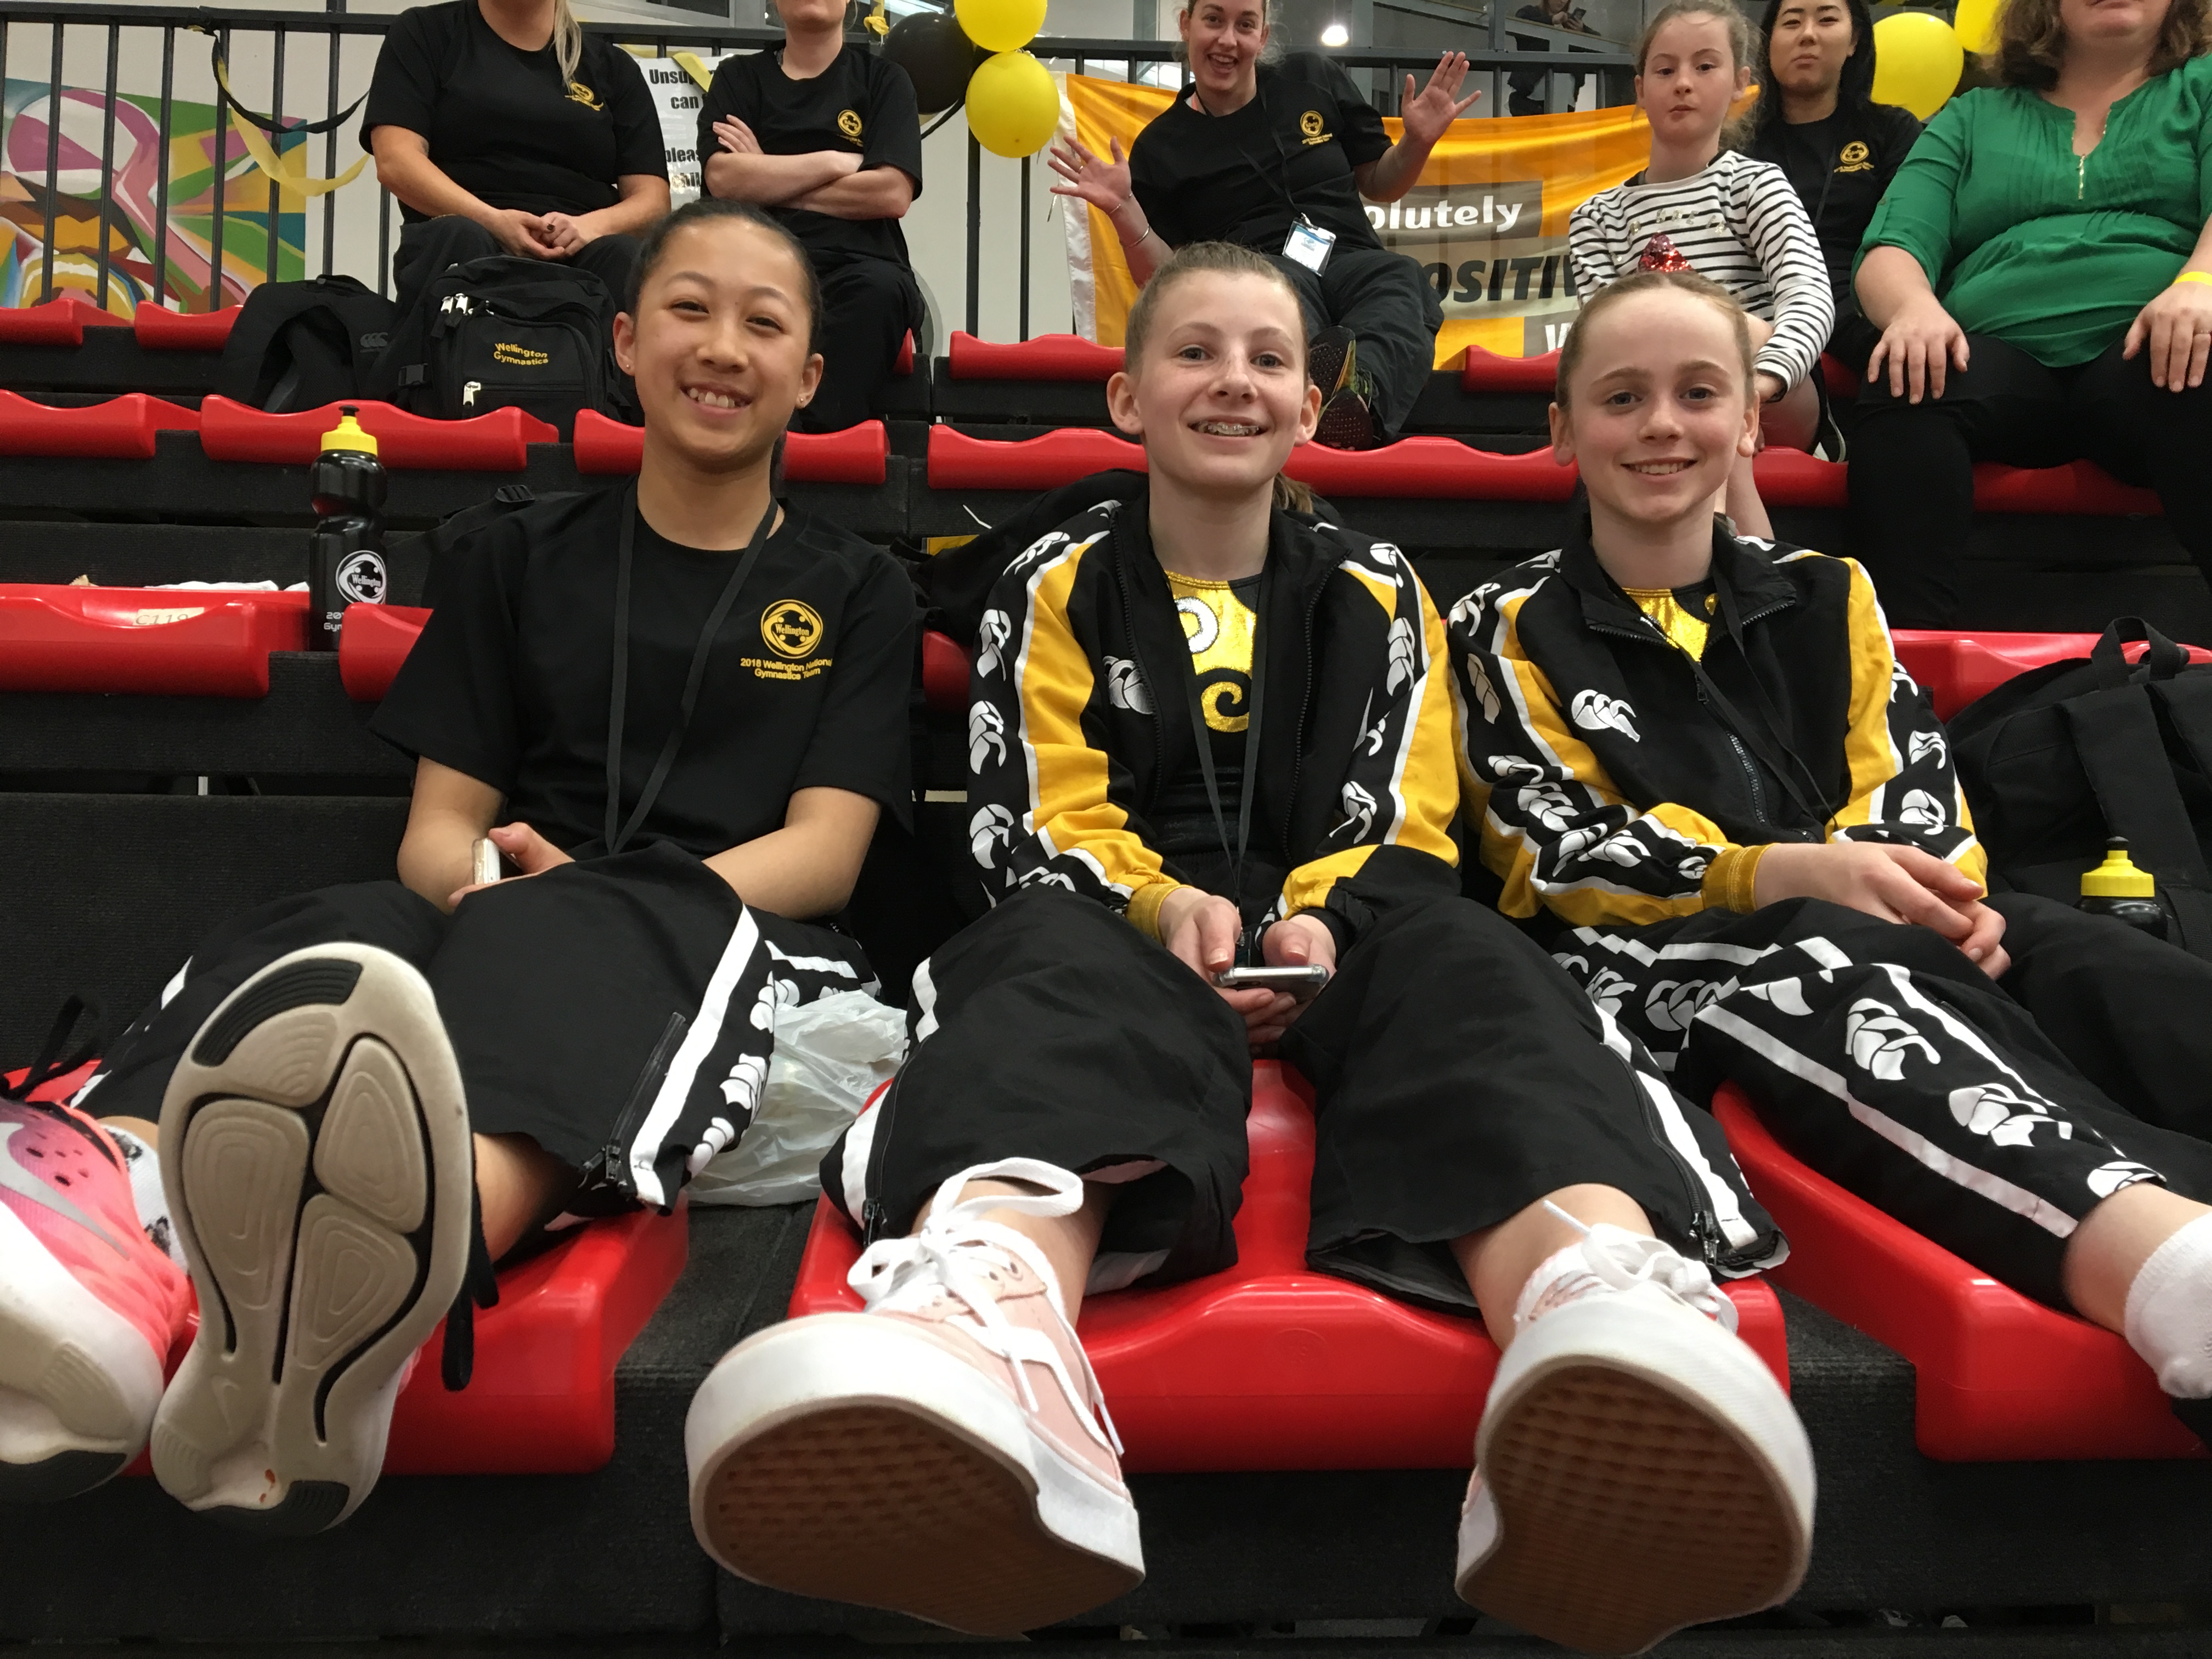 2018 NZ Champs a Hit in Tauranga | GymnasticsNZ